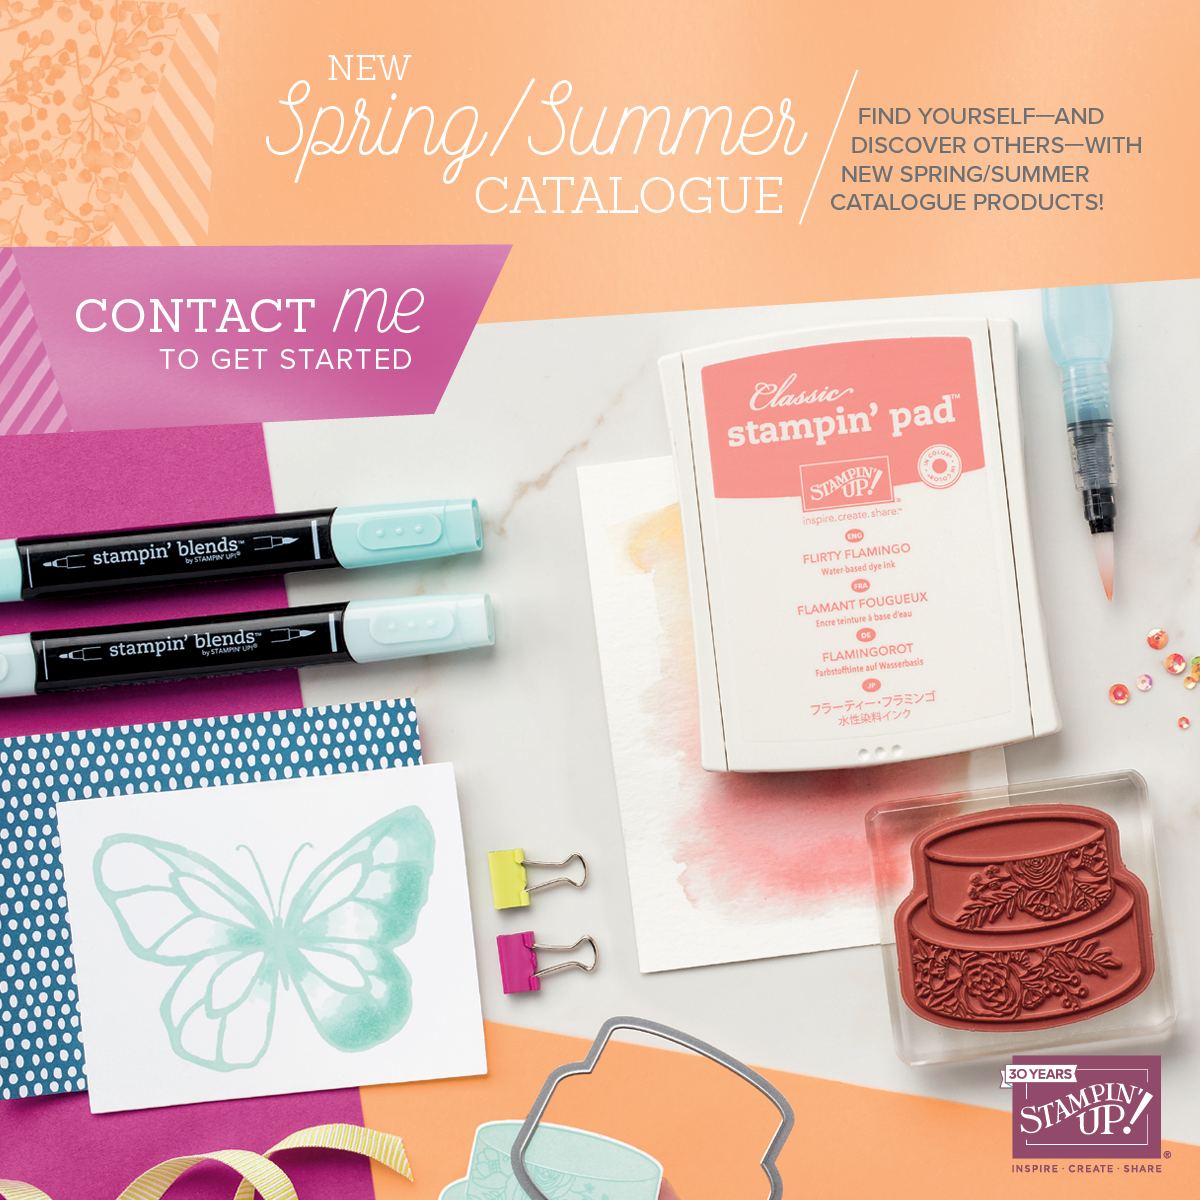 New Spring/Summer Catalogue